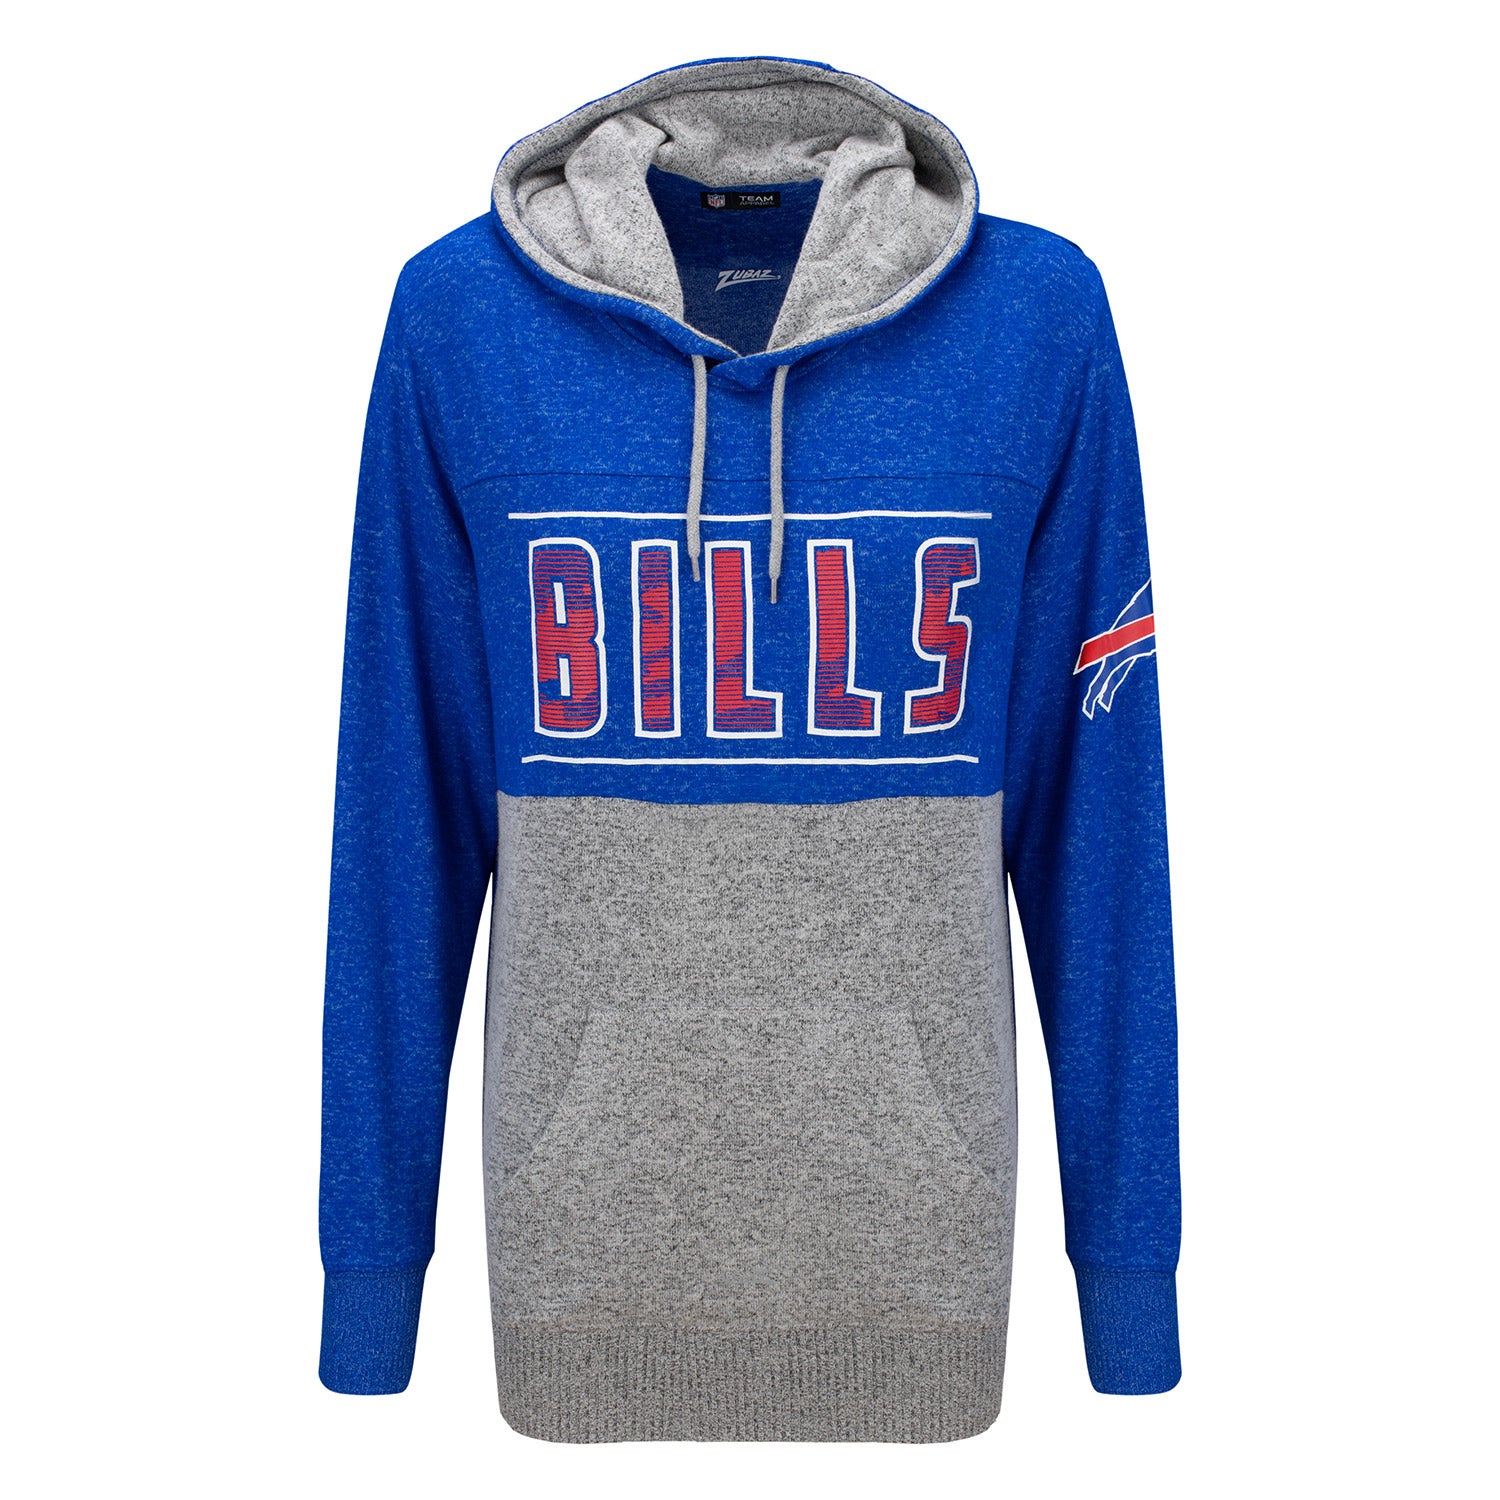 Buffalo Bills Zubaz Apparel | The Bills Store